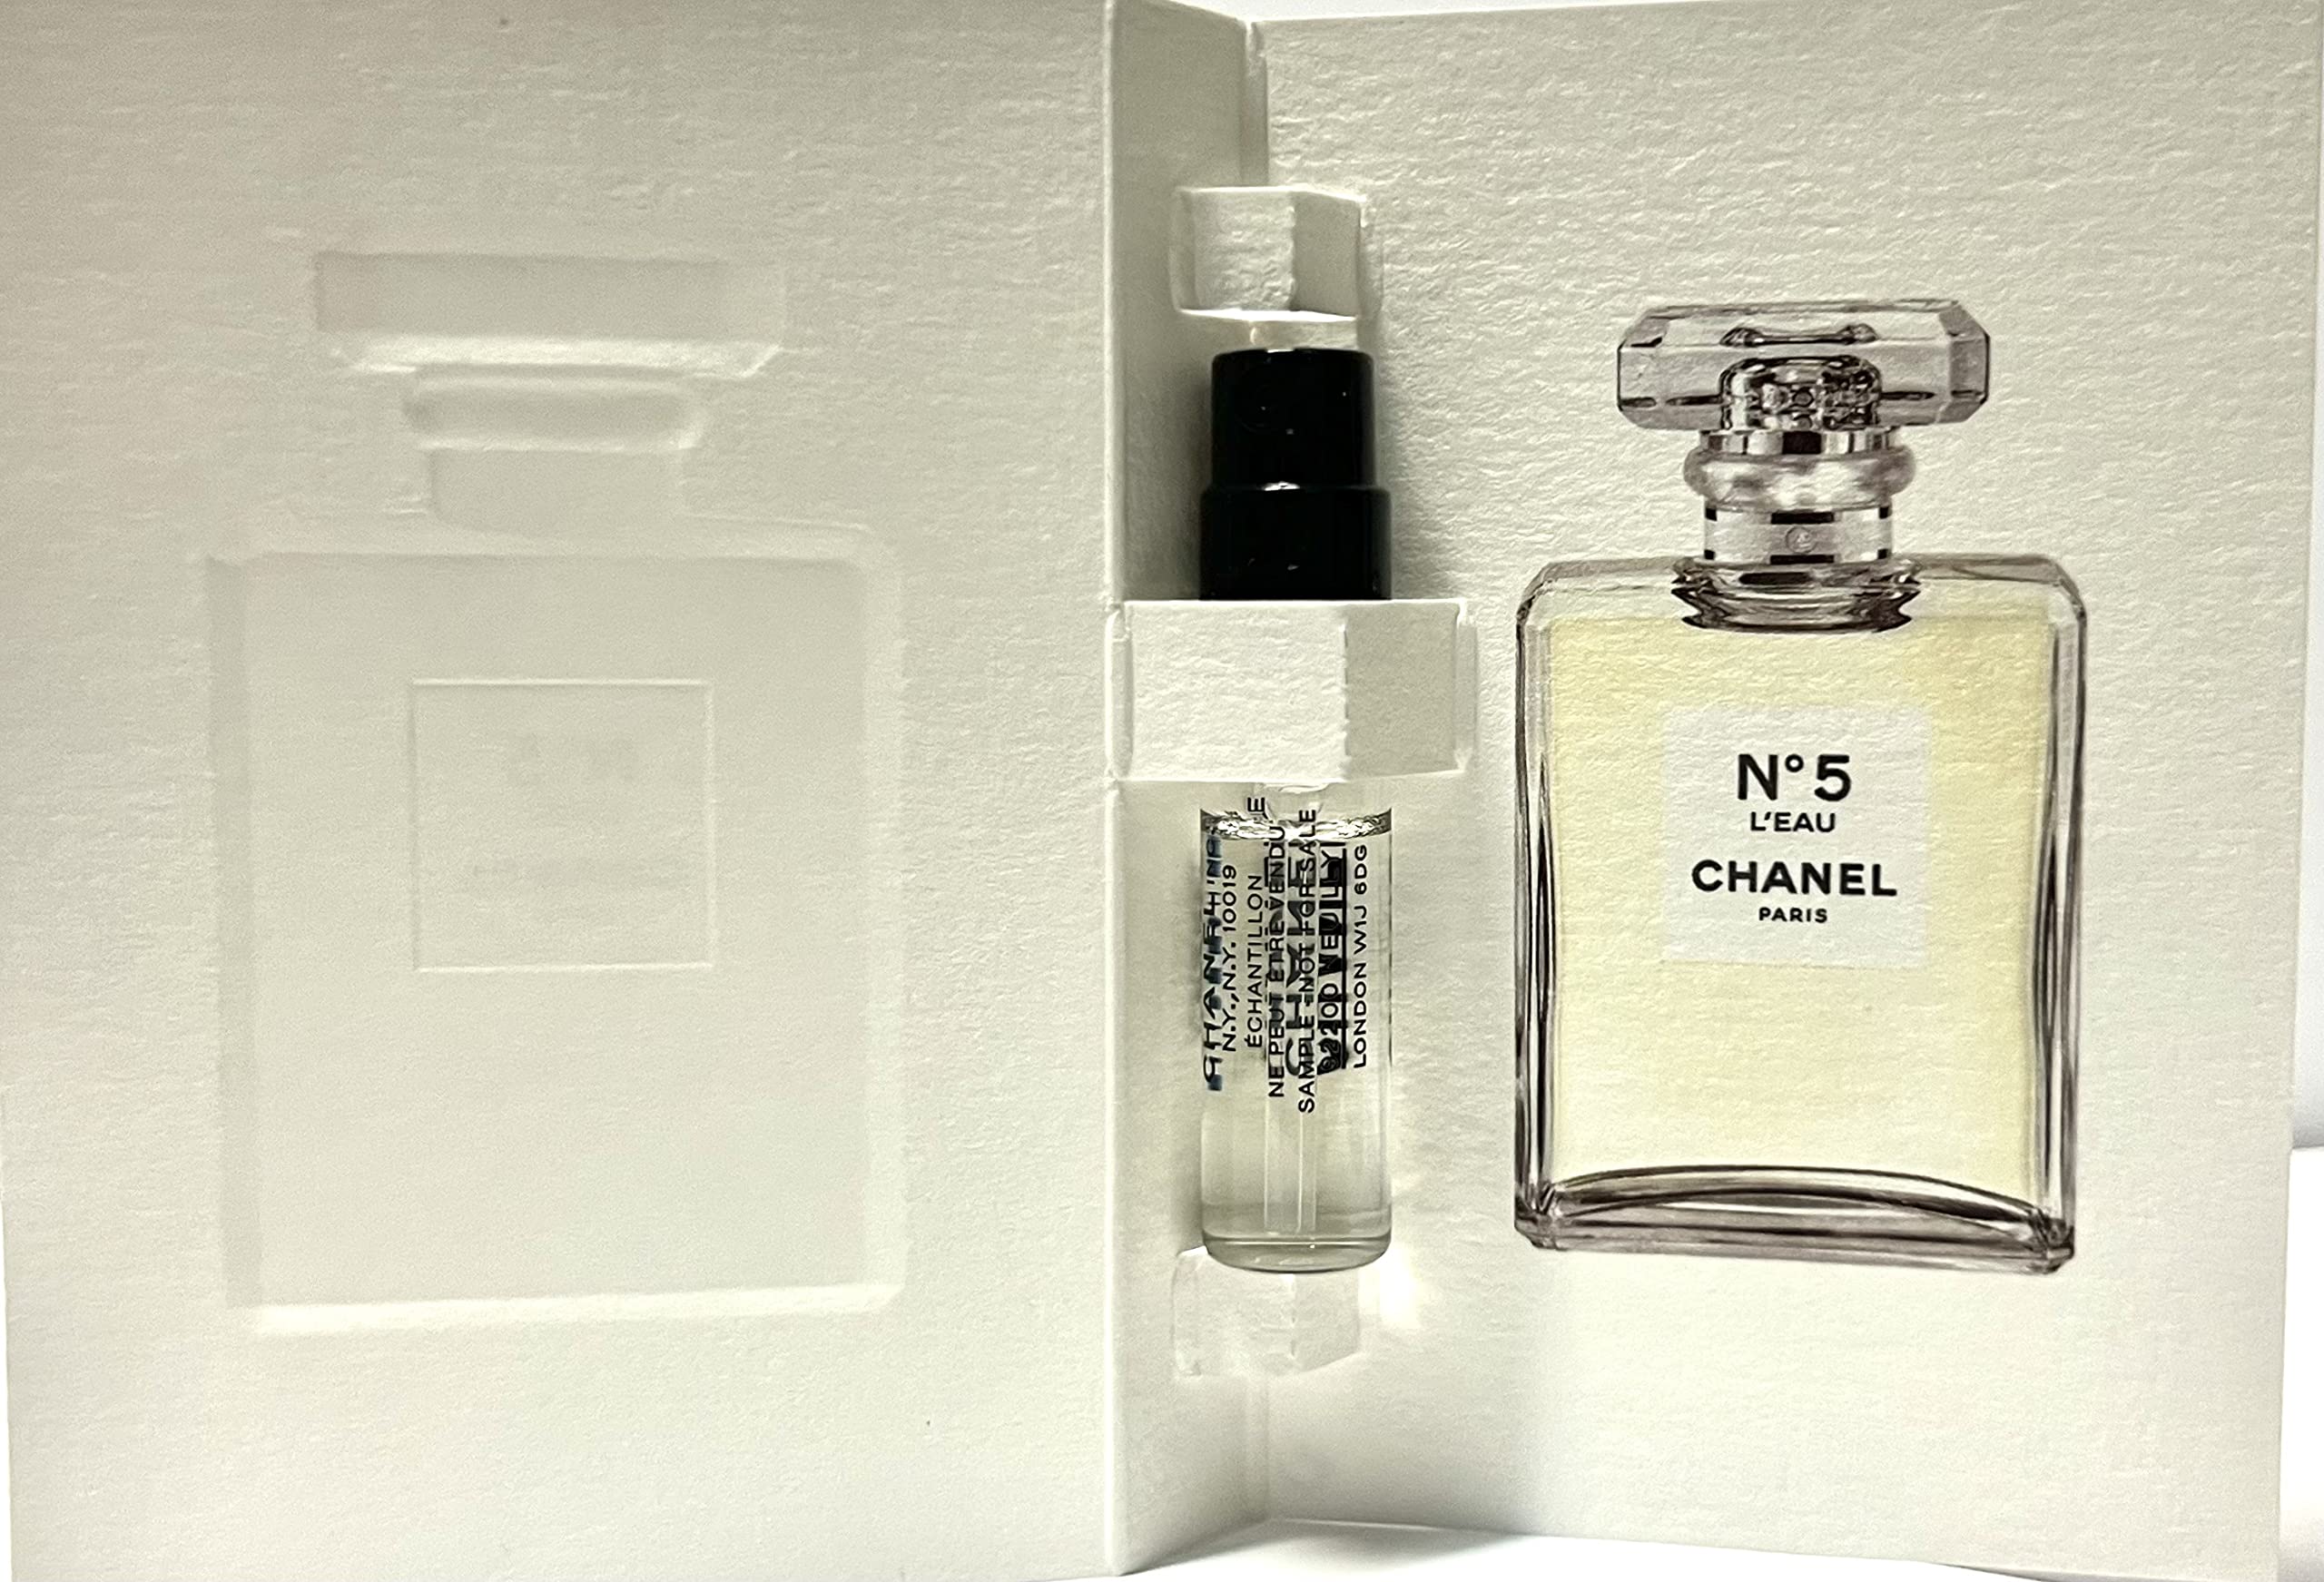 CHANEL No 5 L'EAU EDT Spray Perfume Samples 0.05oz / 1.5ml EACH